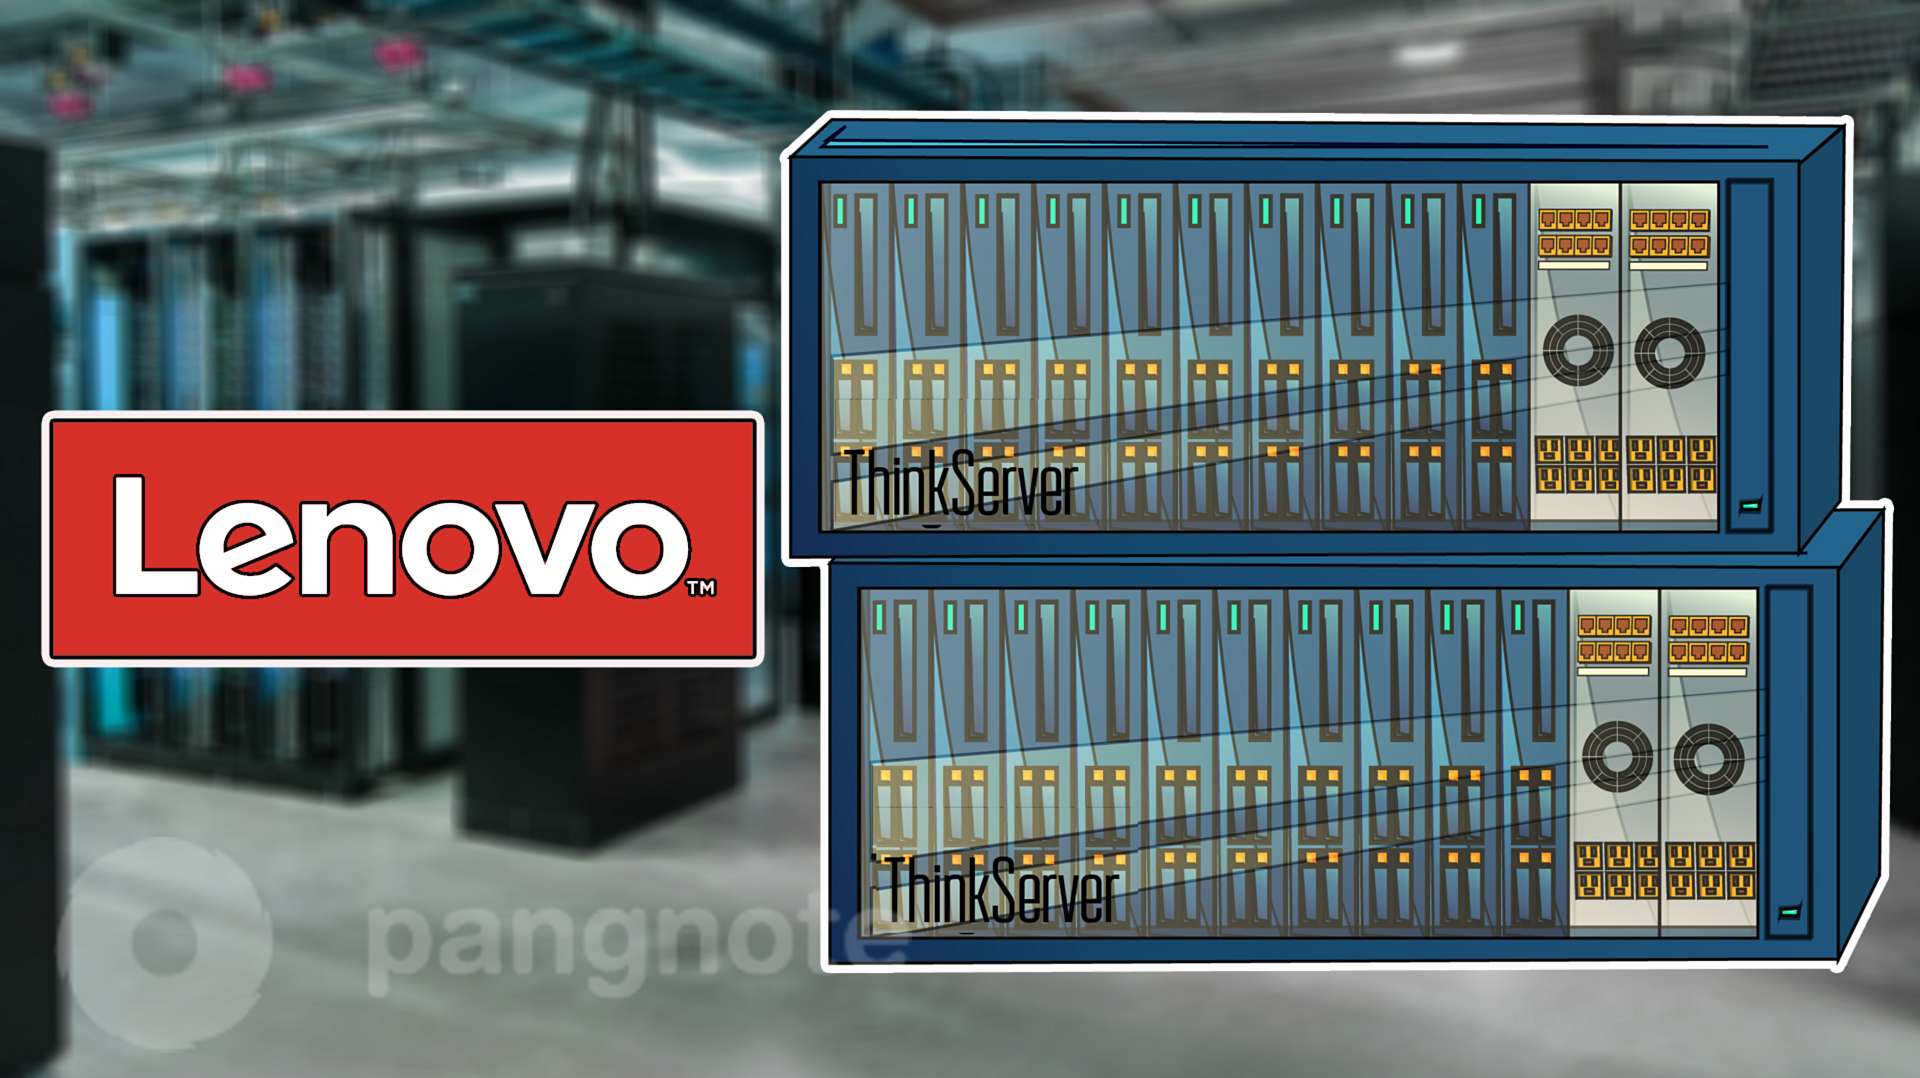 Lenovo presented equipment for DCs